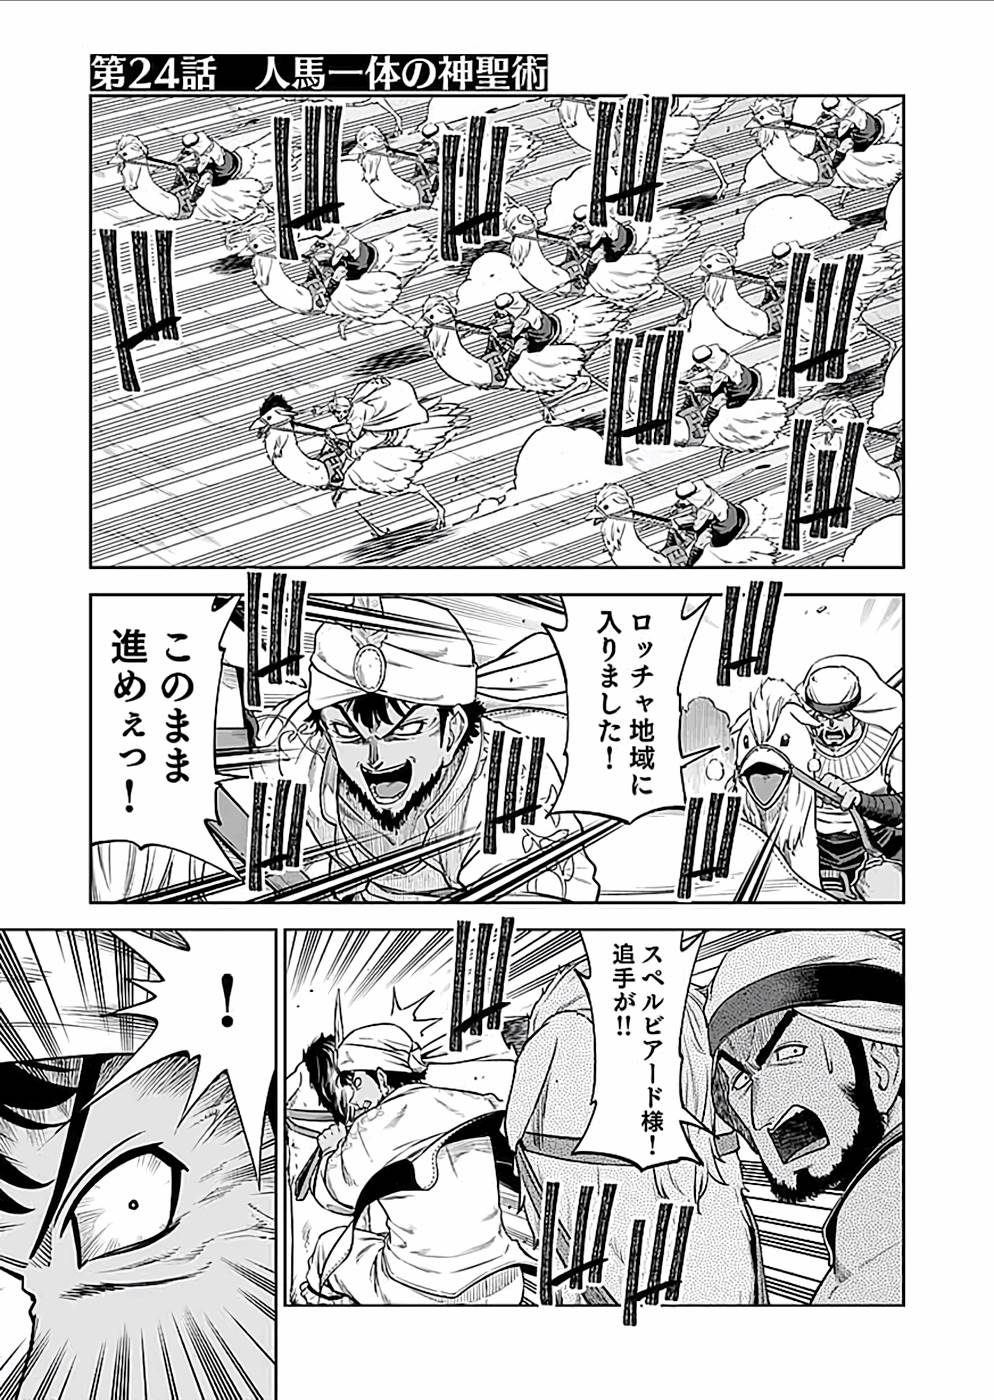 Millimos Saga: Battei Ouji no Tensei Senki - Chapter 24 - Page 1